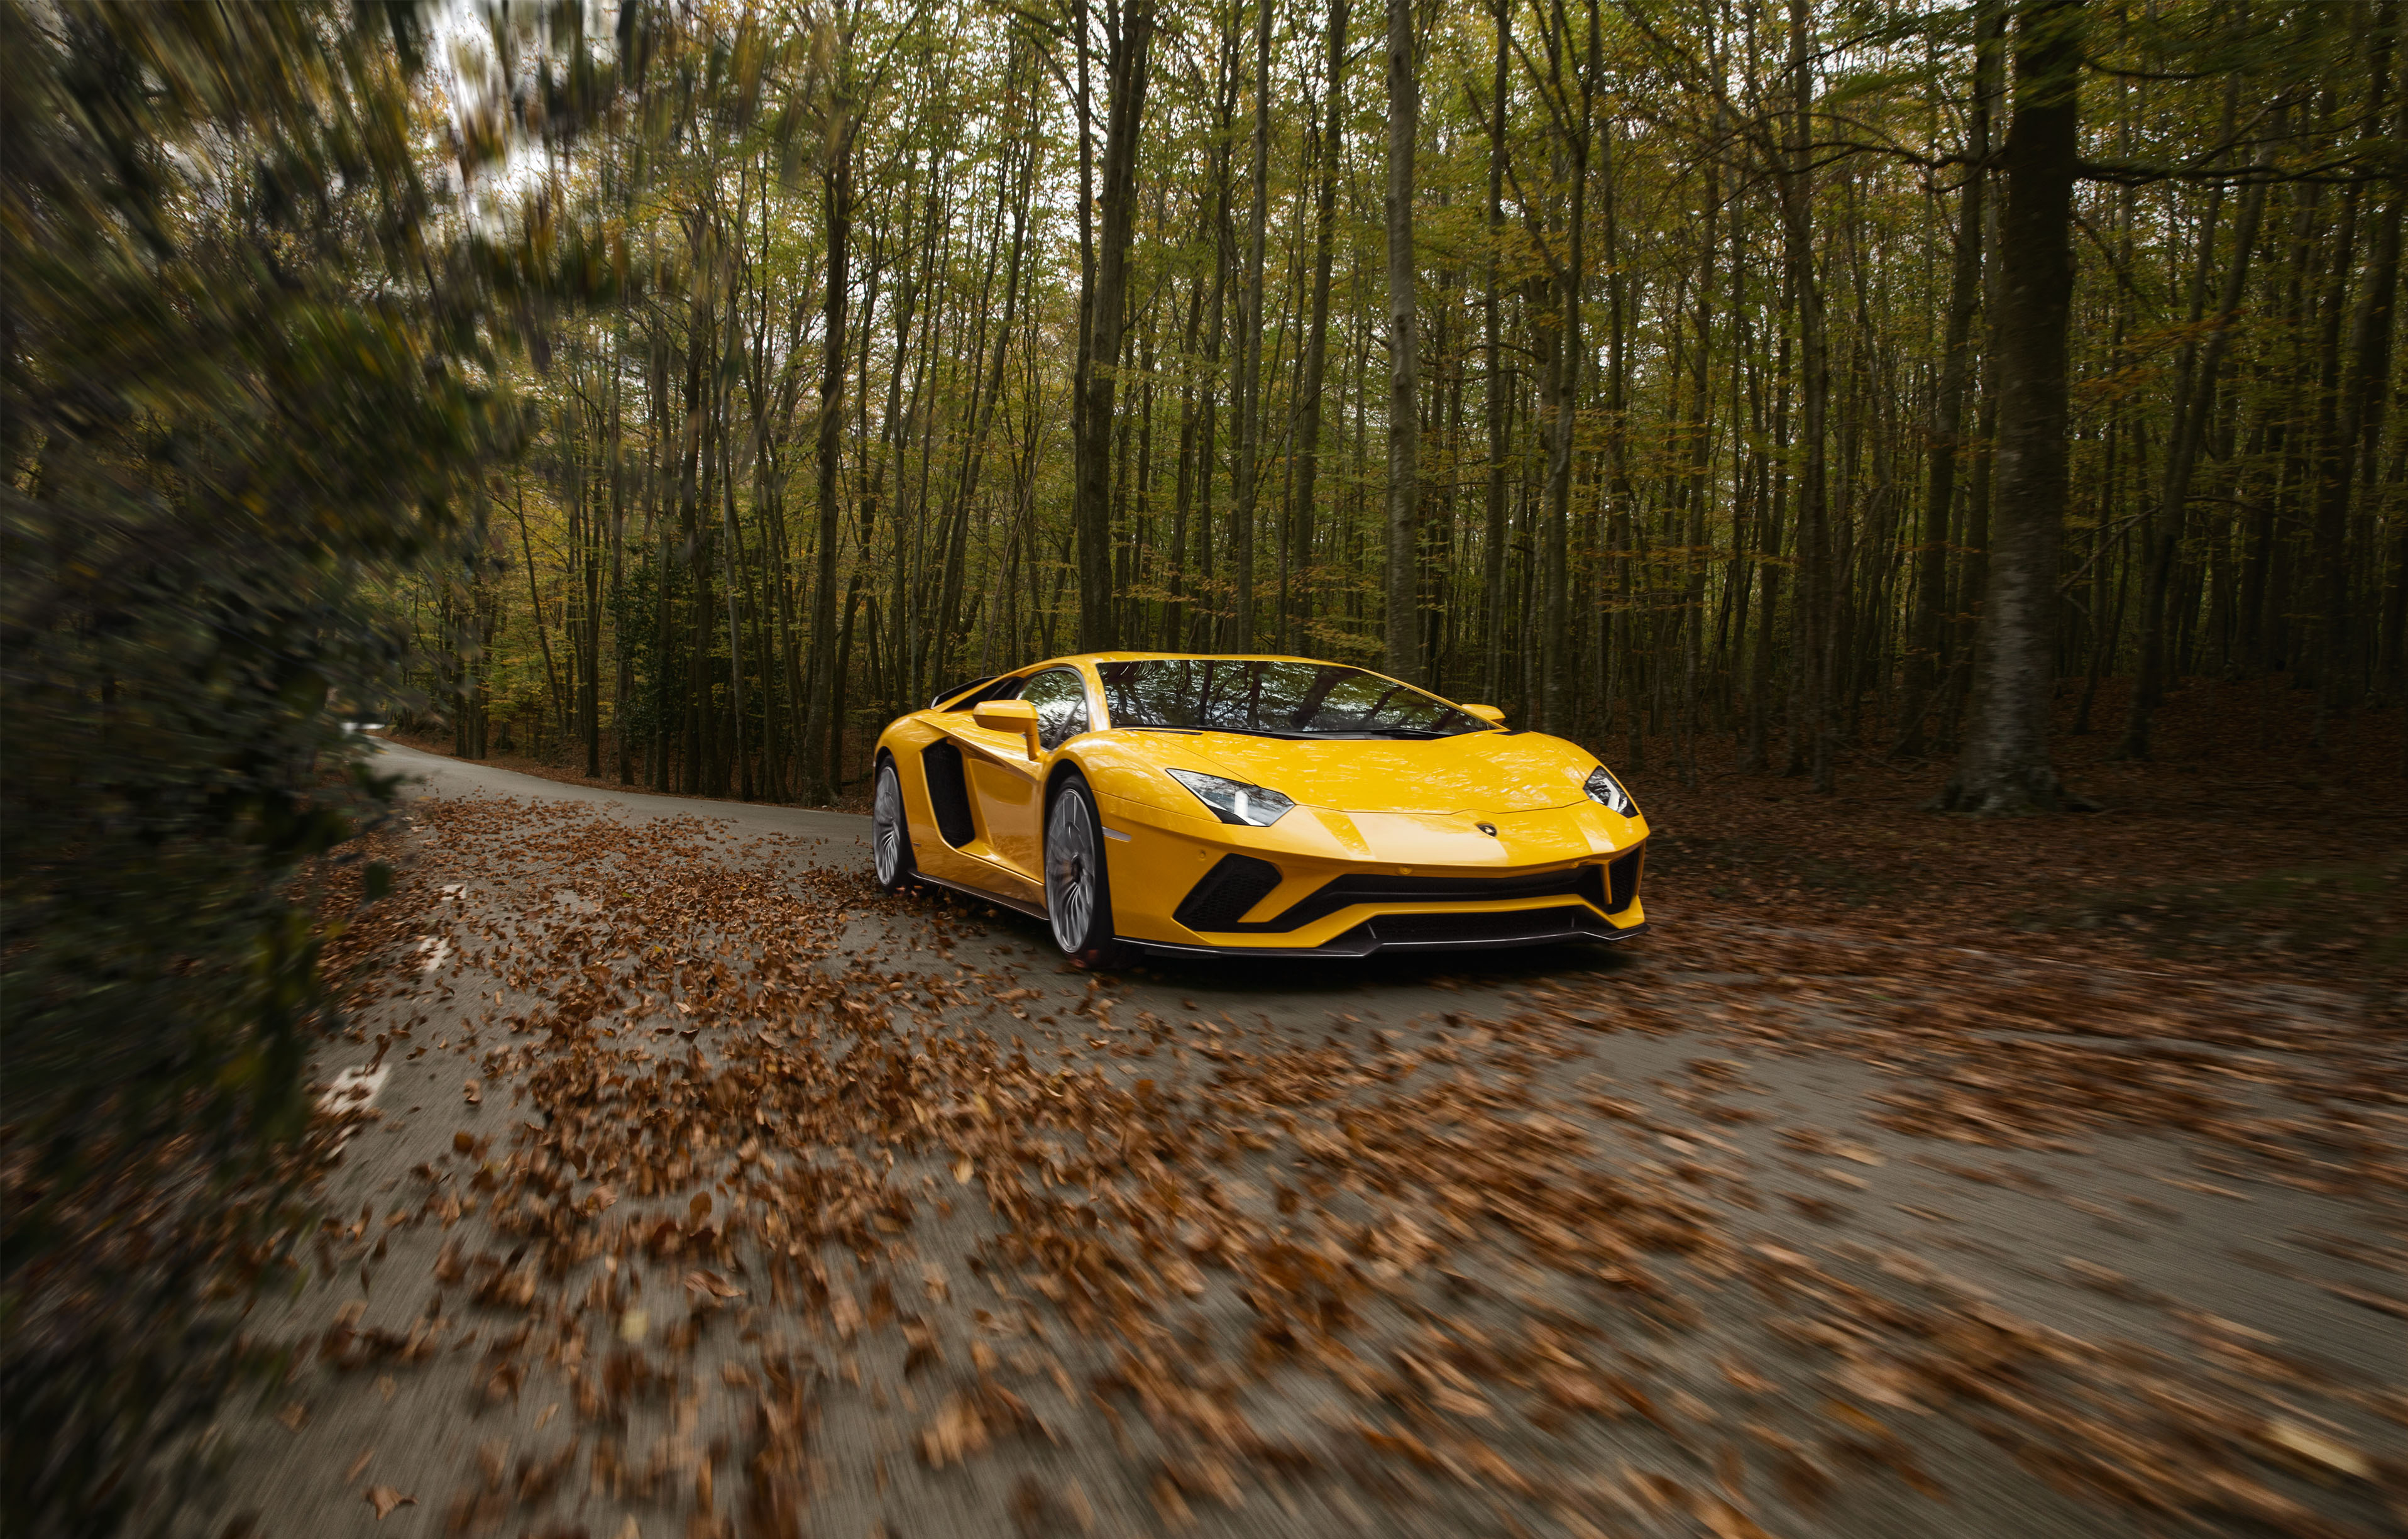 Free photo Yellow Lamborghini Aventador rides on fallen leaves